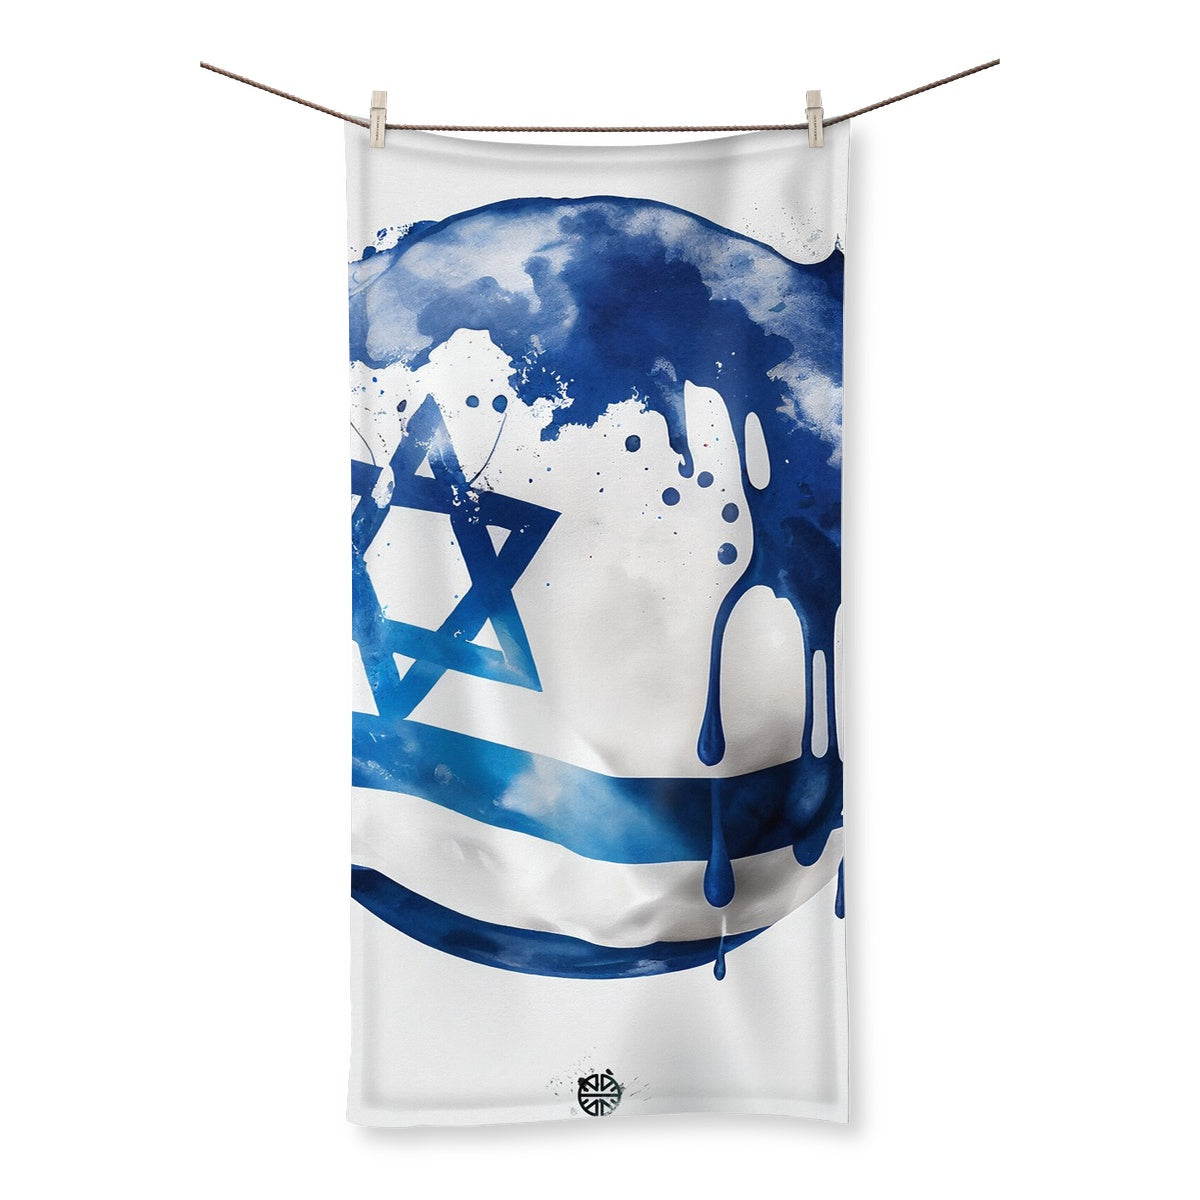 Vibrant Israeli Waves // Expressive Flag Art Towel – A Splash of National Love and Style Wherever You Go!